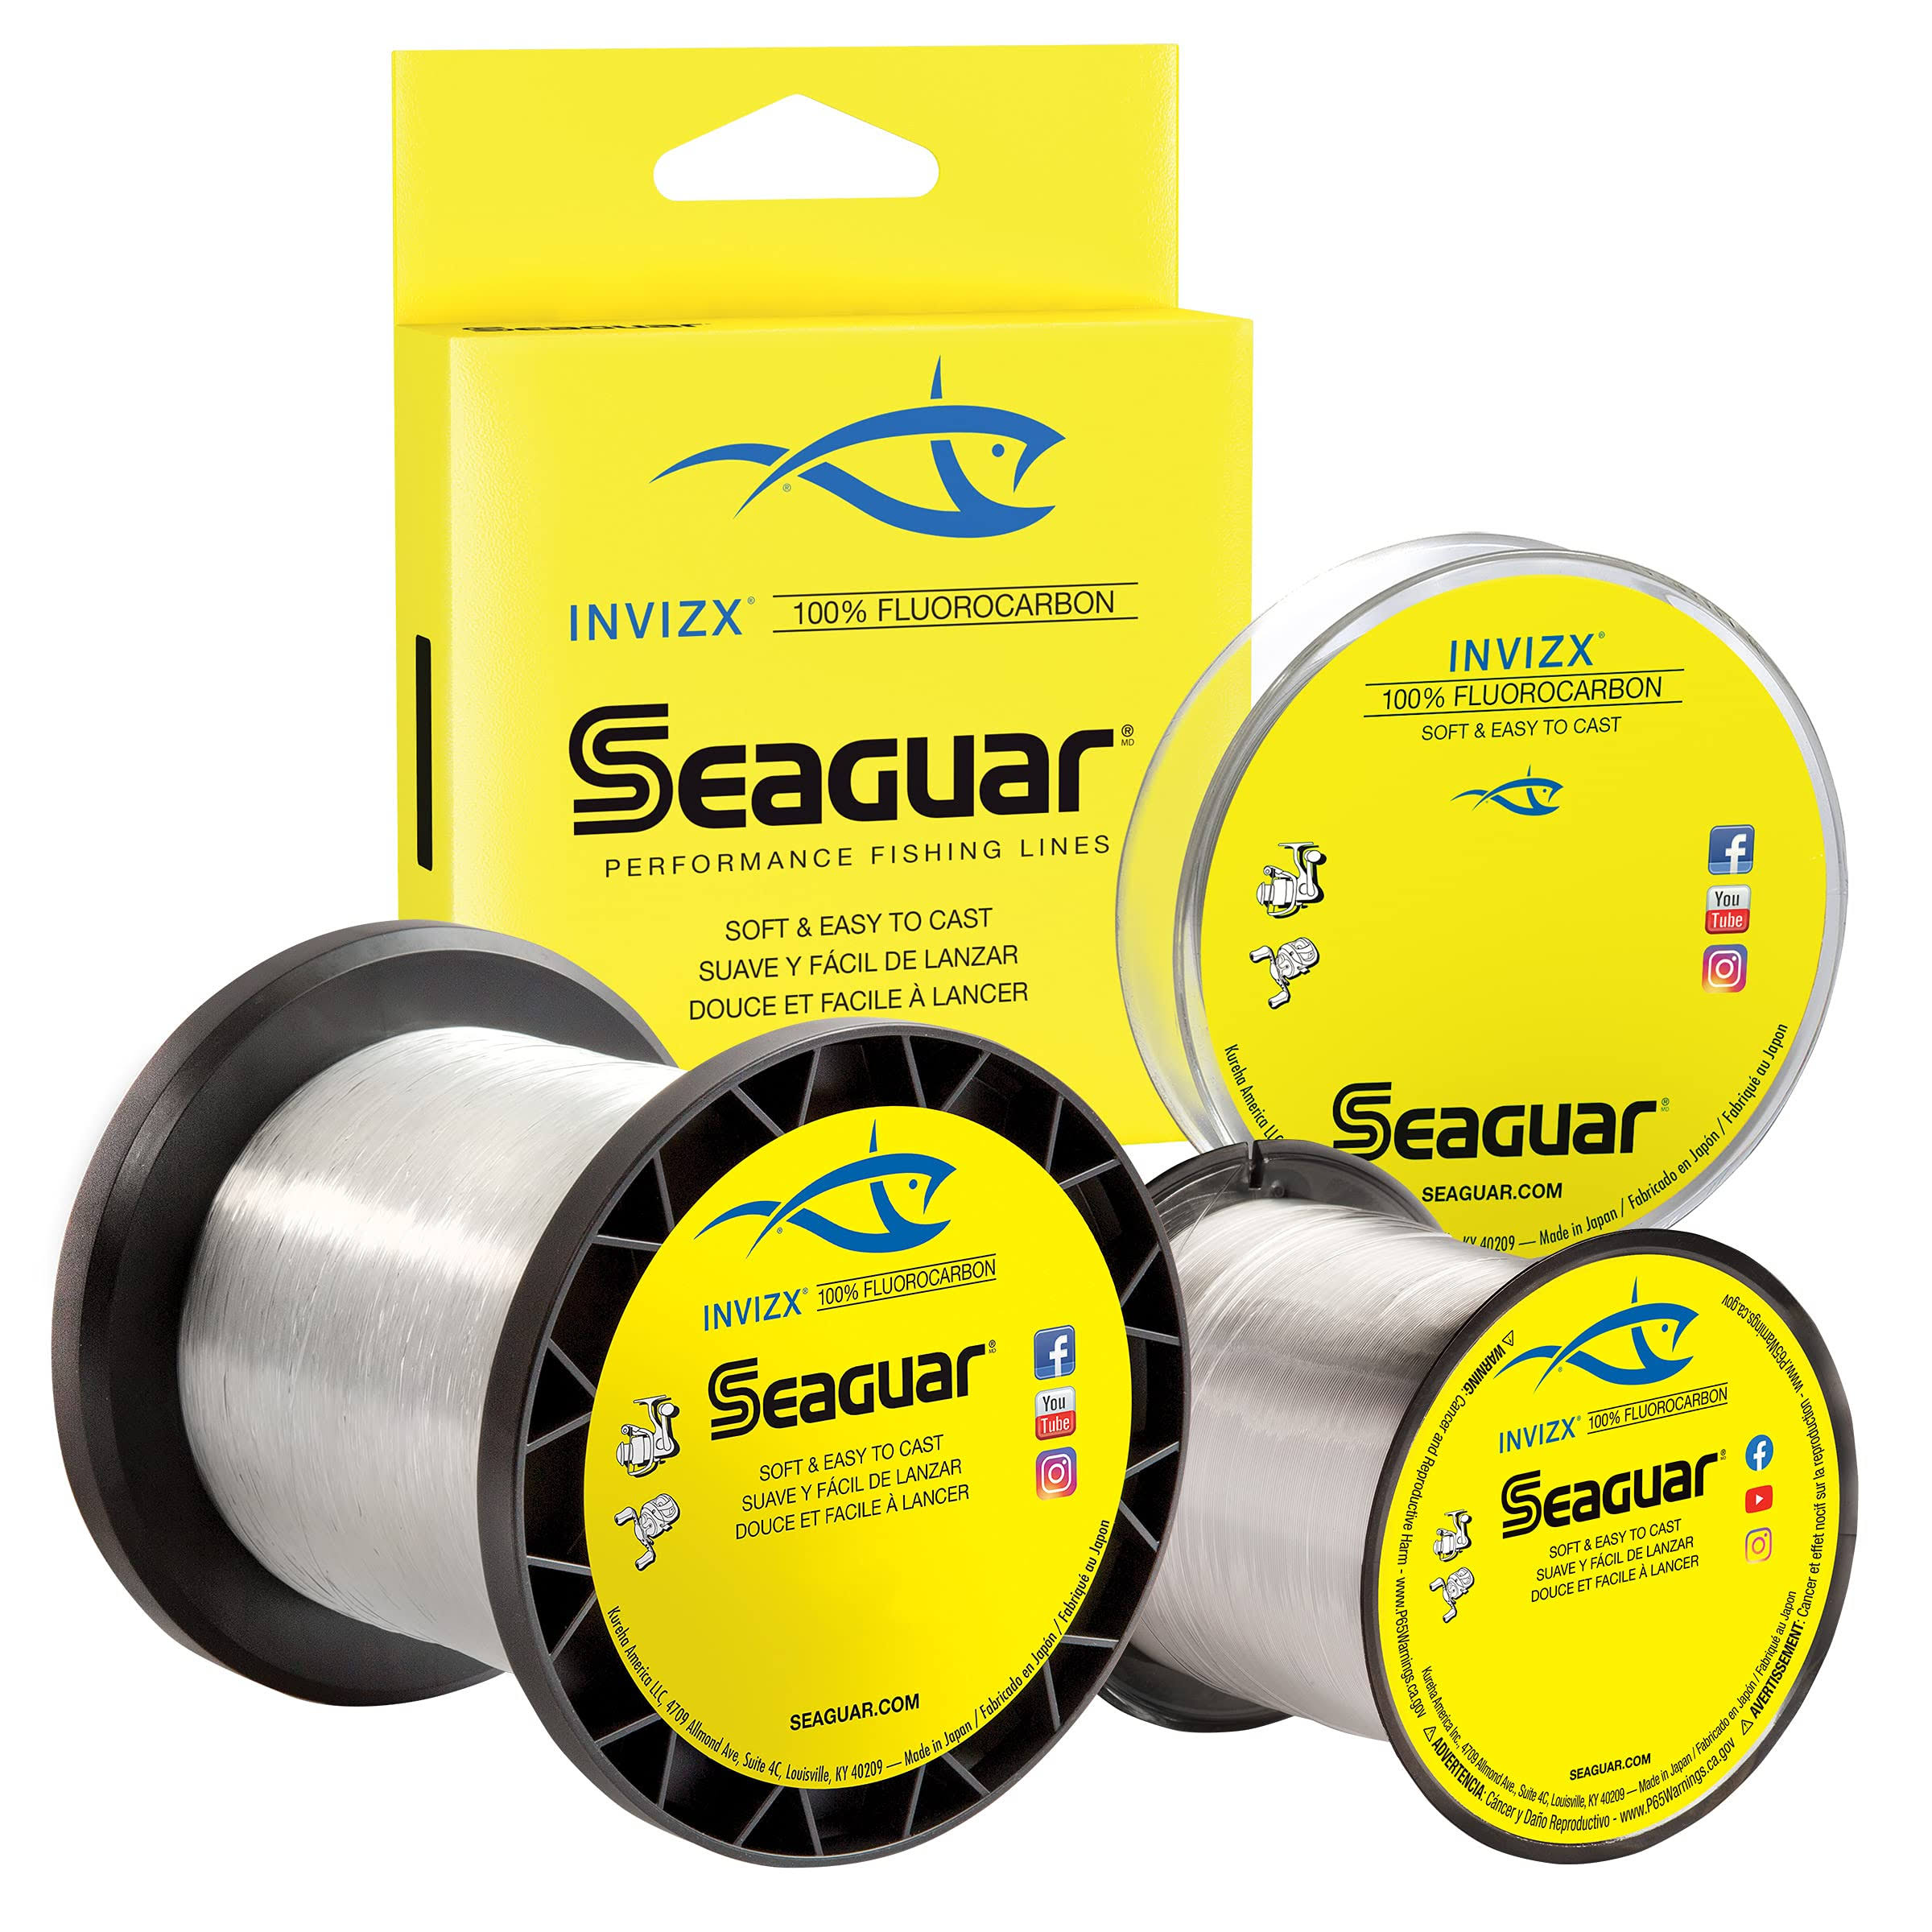 Seaguar Invizx 100% Fluorocarbon Fishing Line Freshwater Mainline